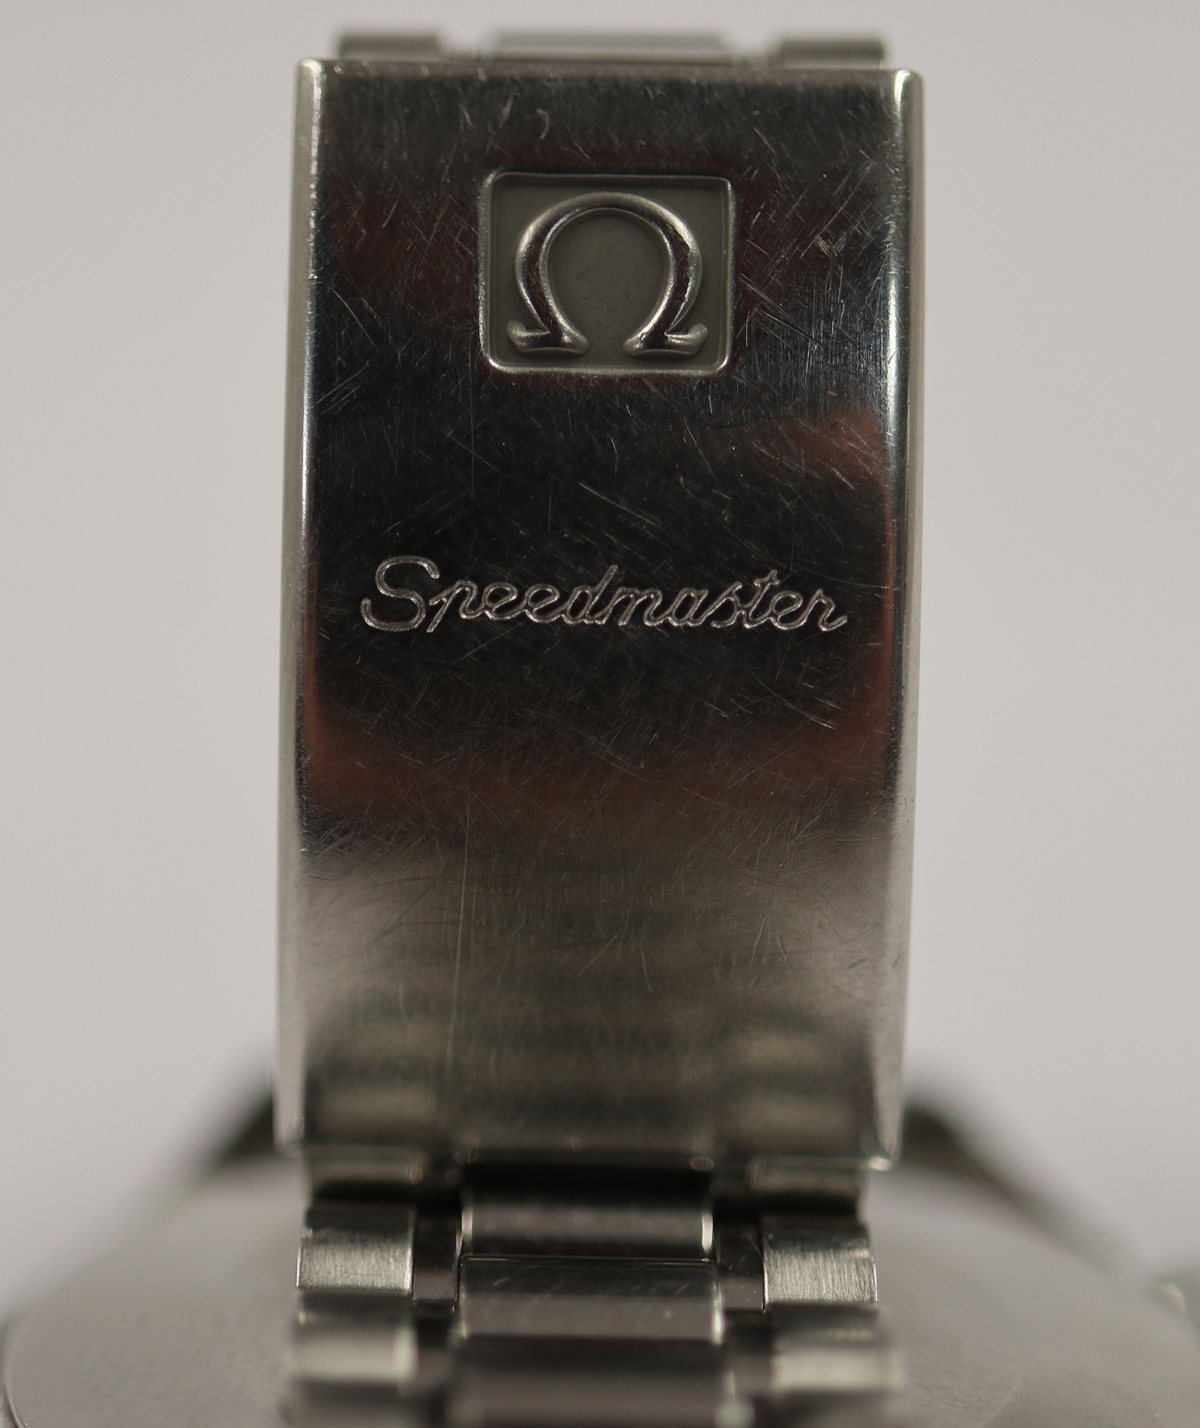 Omega Speedmaster watch in good order - Image 3 of 4